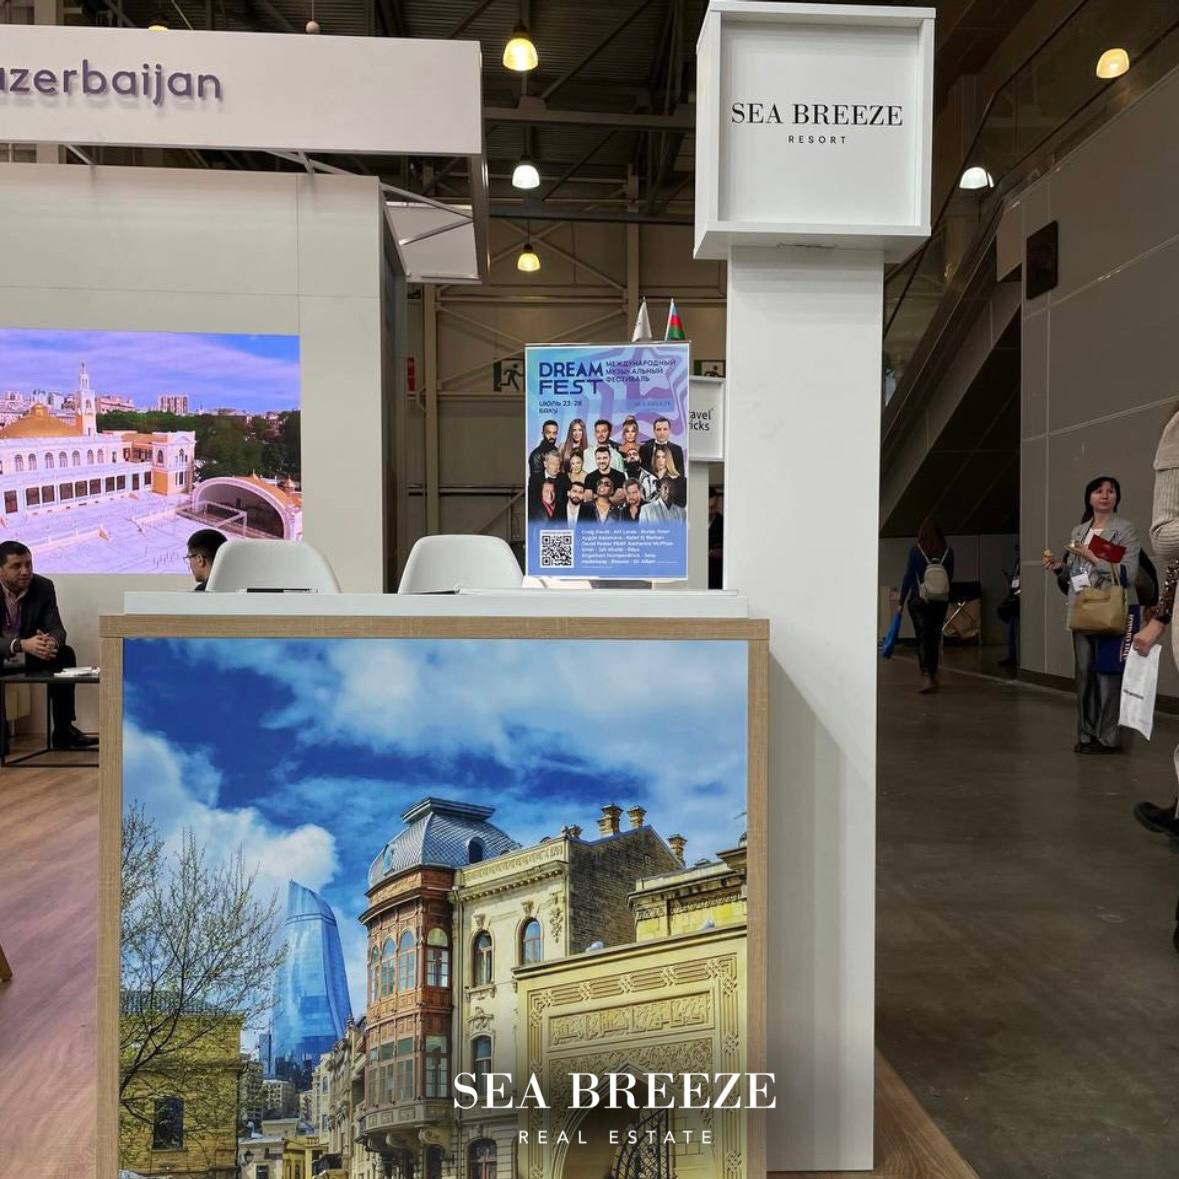 Sea Breeze took part in the MITT tourism exhibition